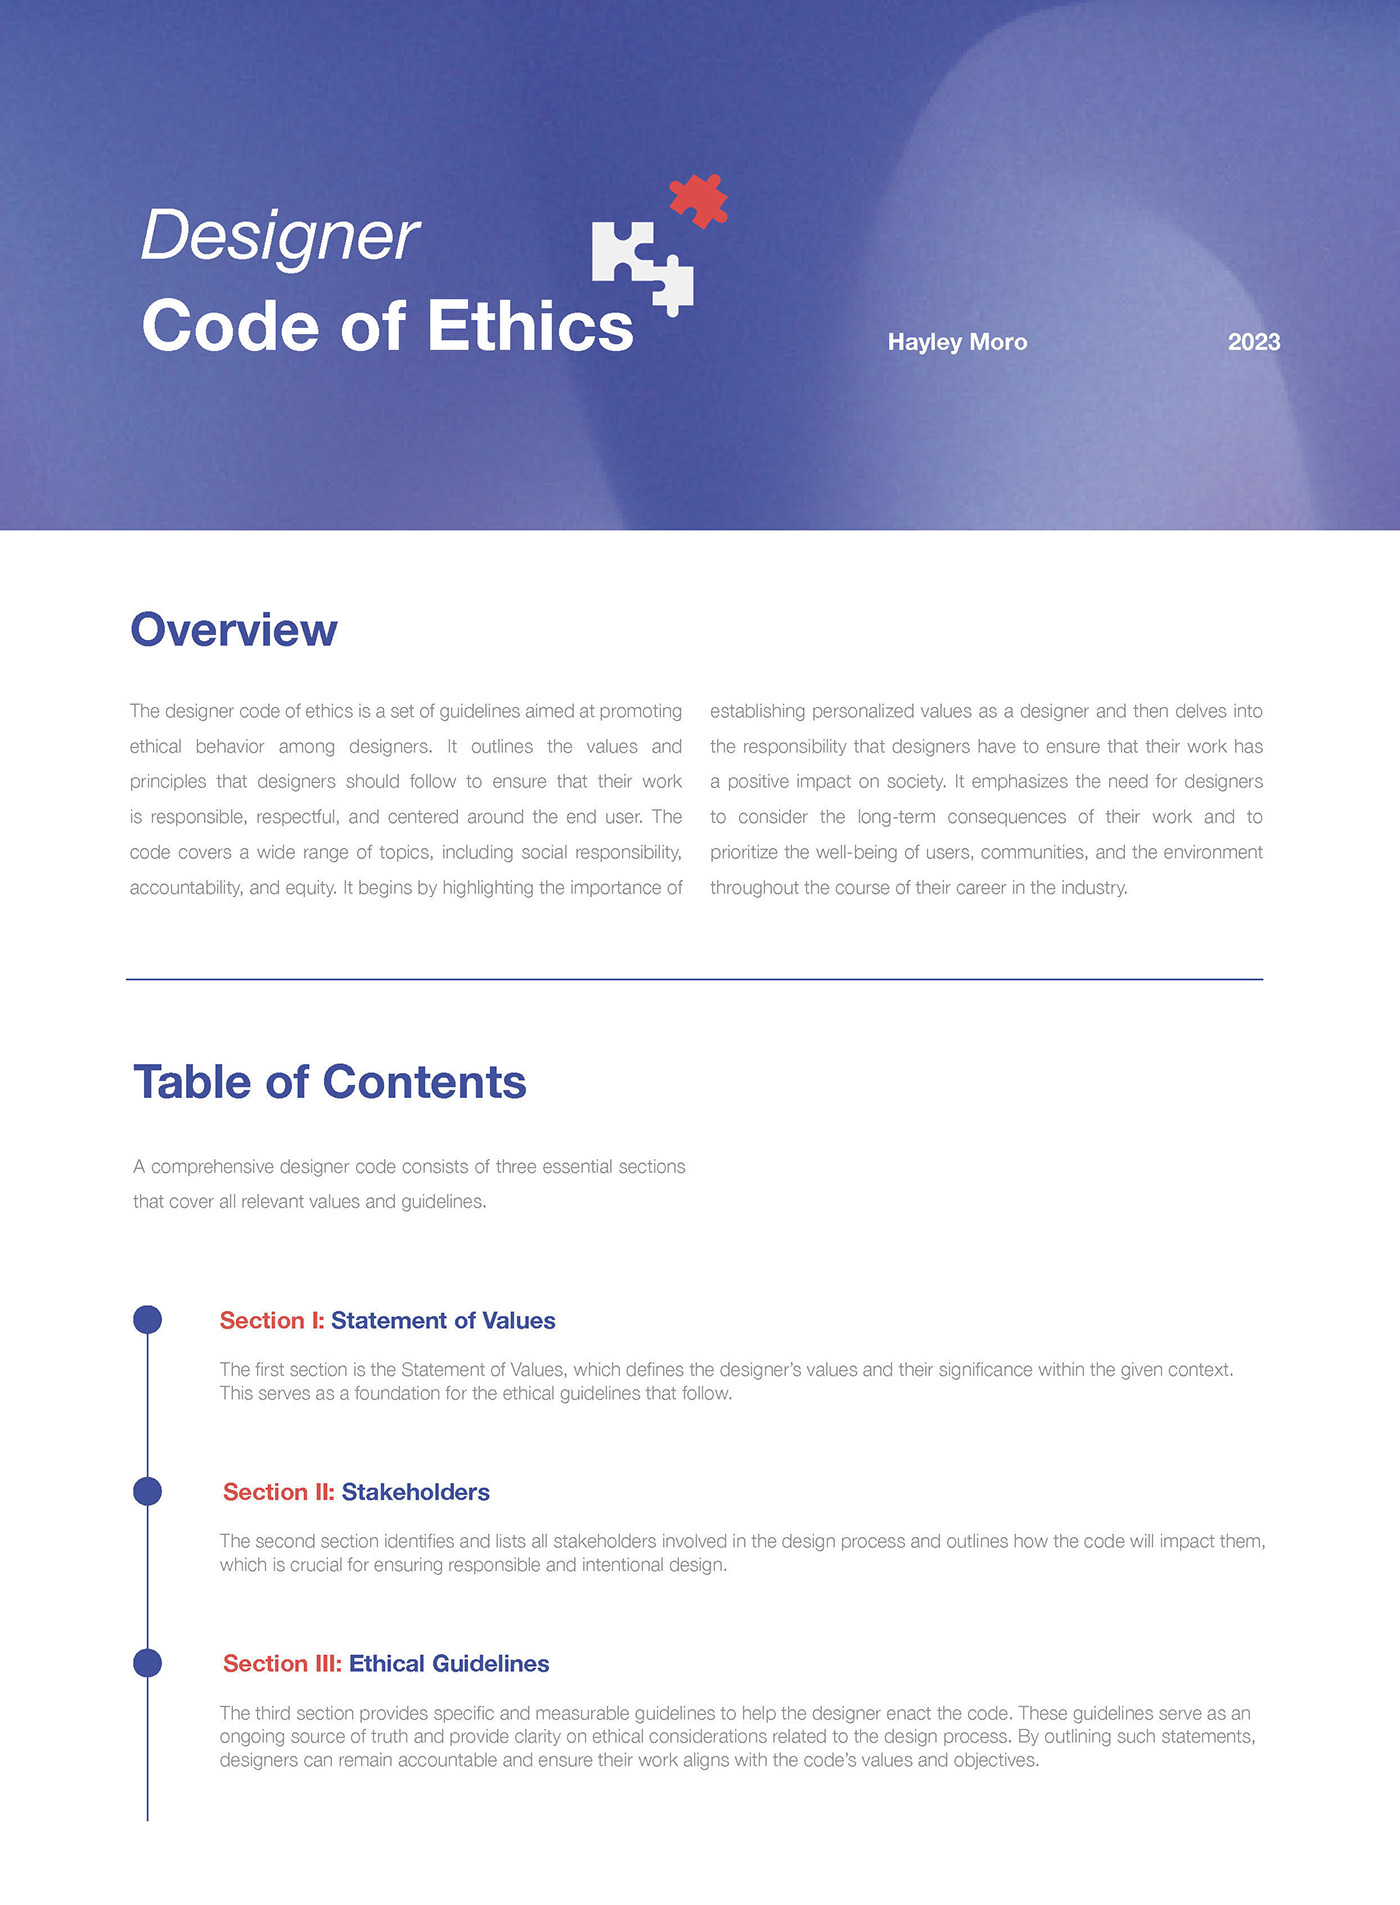 Adobe InDesign code of ethics design designer Ethics internal